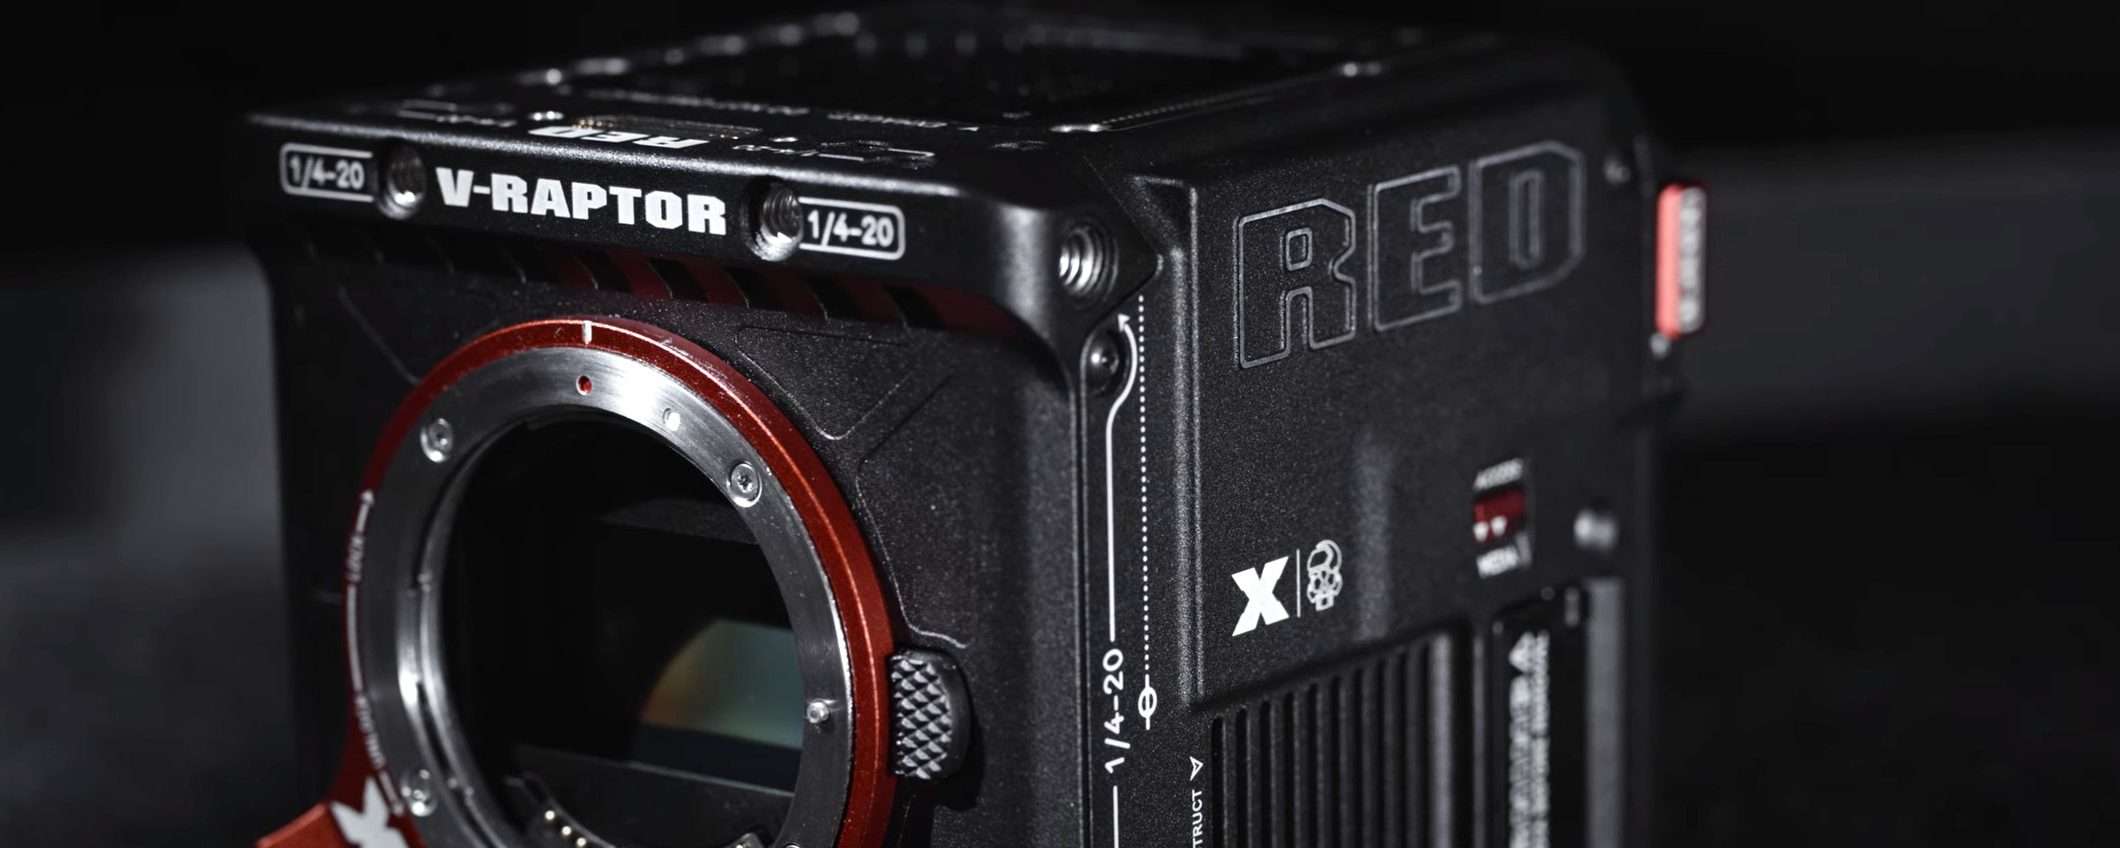 Nikon compra RED: l'acquisizione è ufficiale